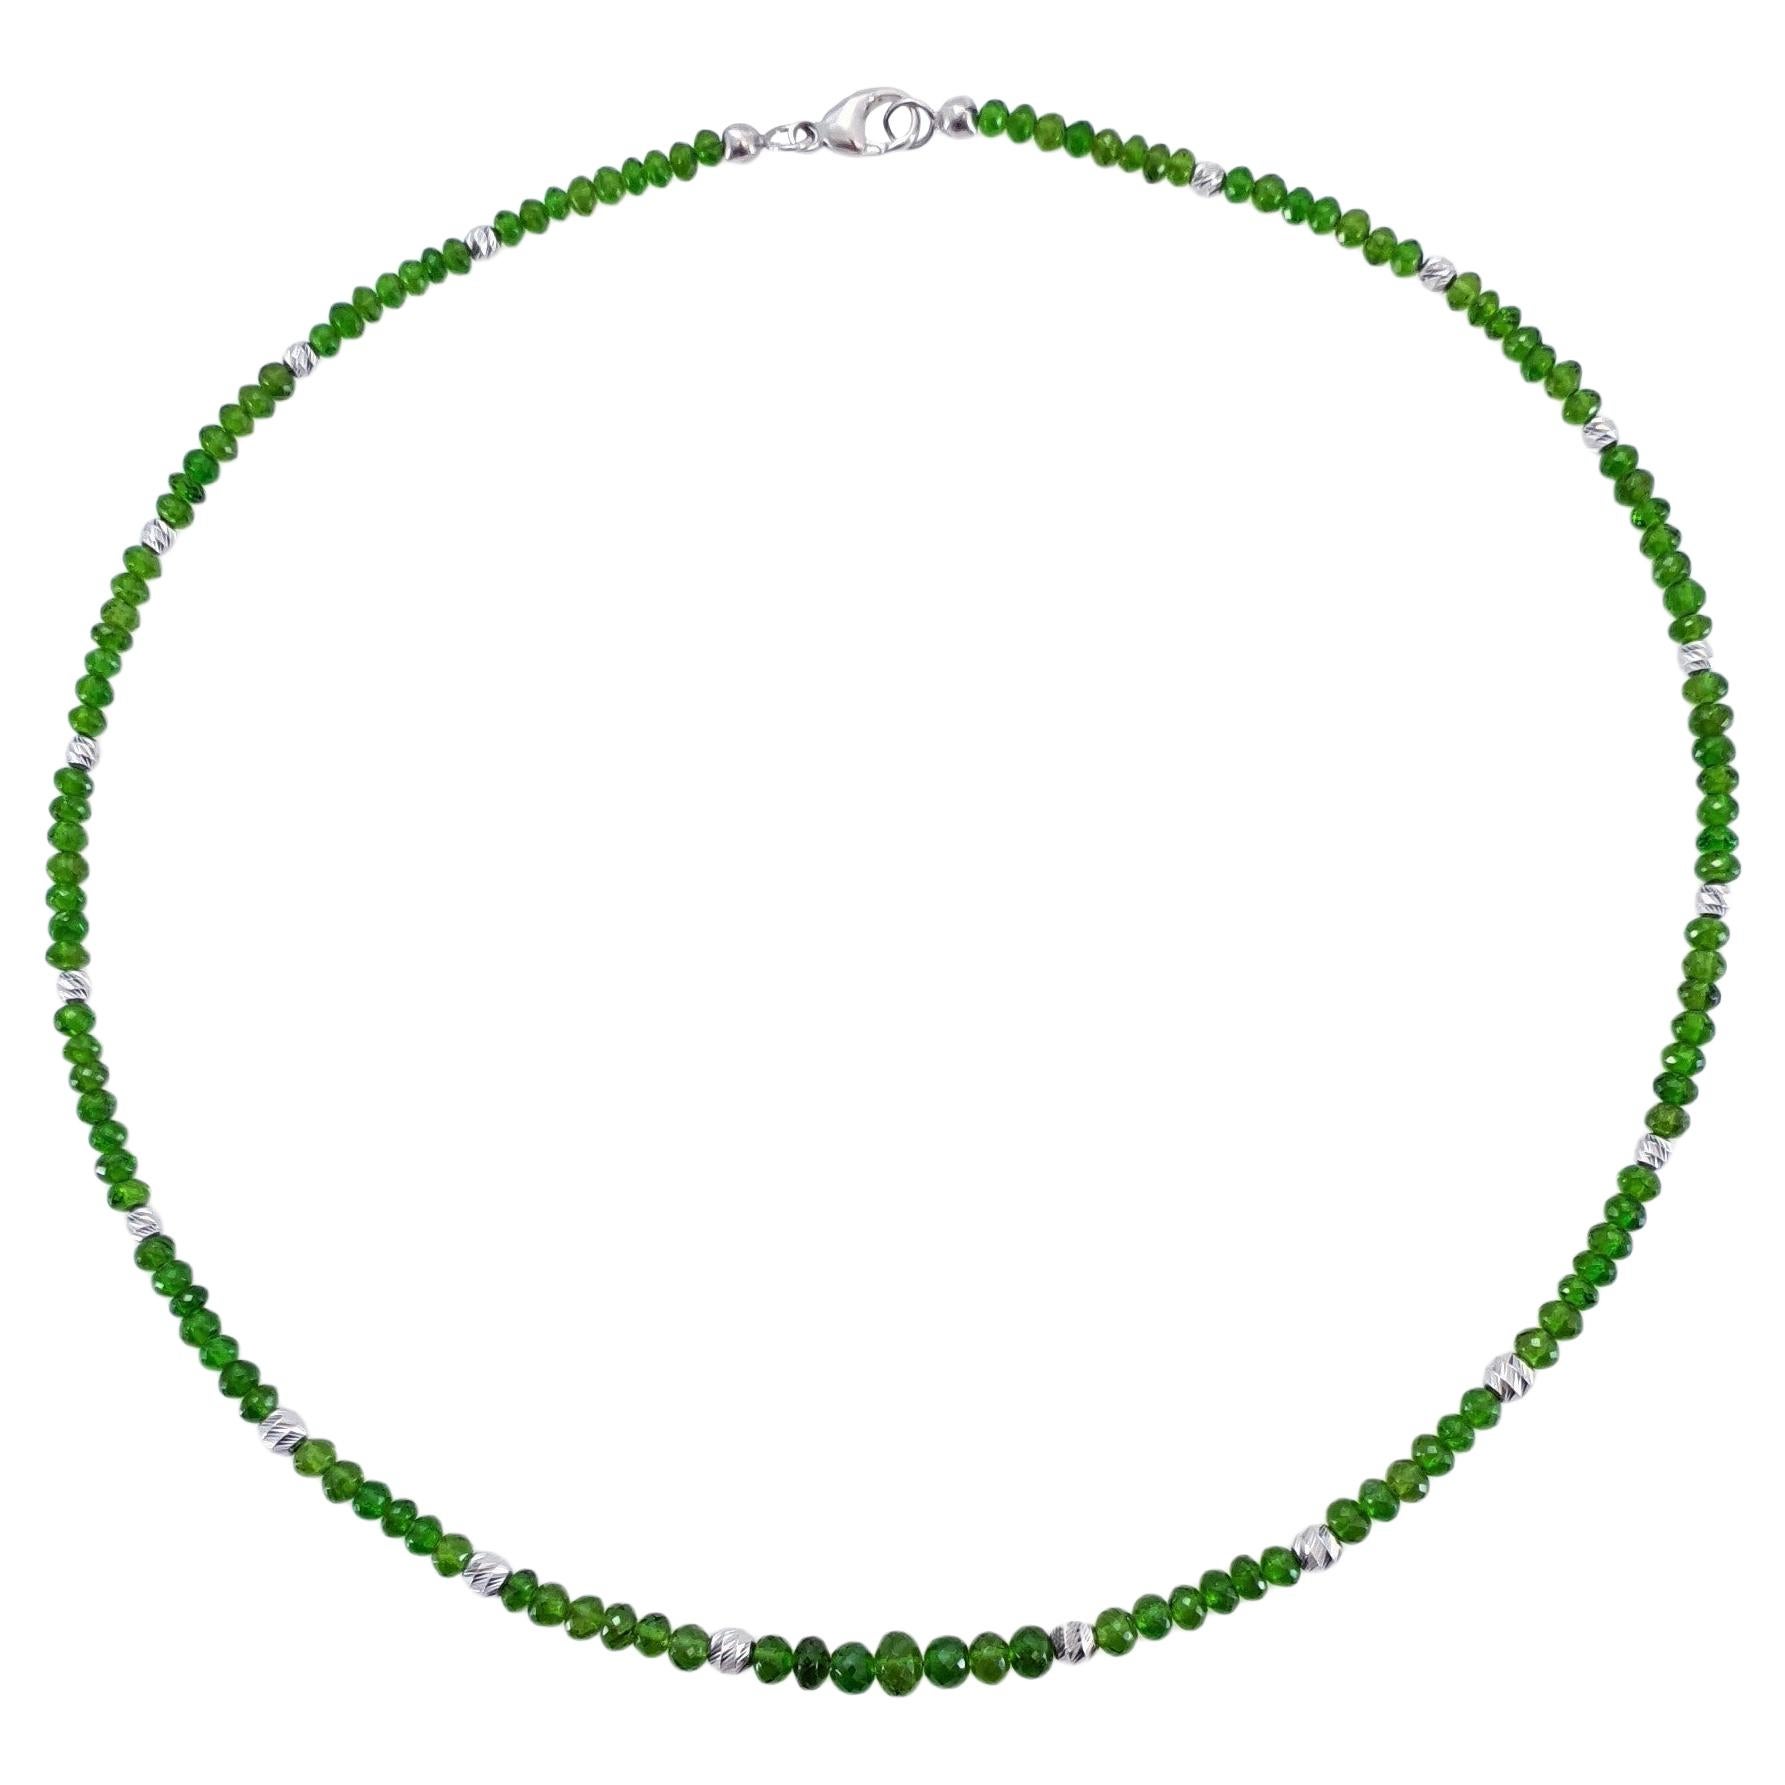 Diopside Rondel Collier de perles en or blanc 18 carats avec chrome vert émeraude